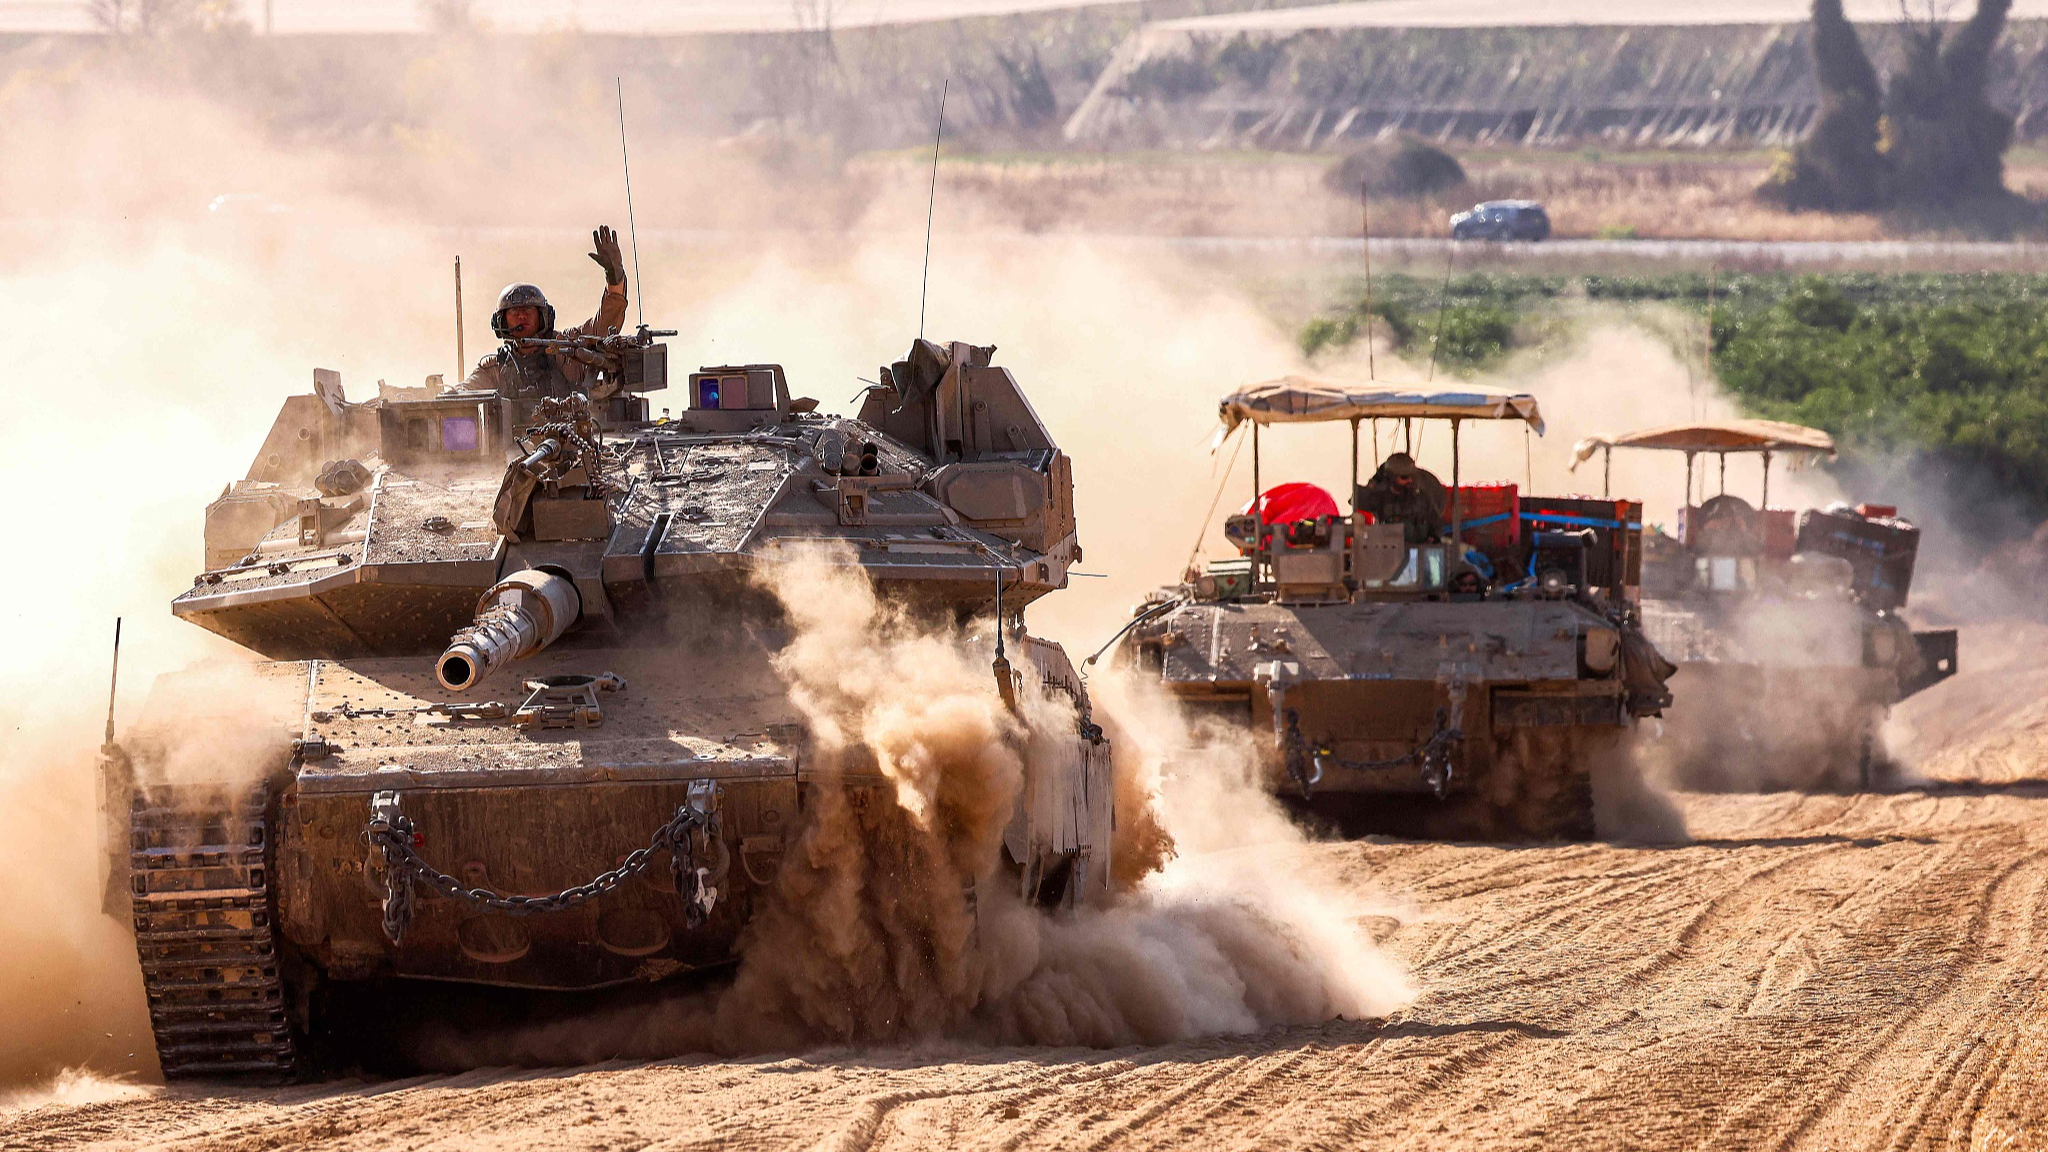 Israel intensifies Gaza offensive as U.S. urges protecting civilians